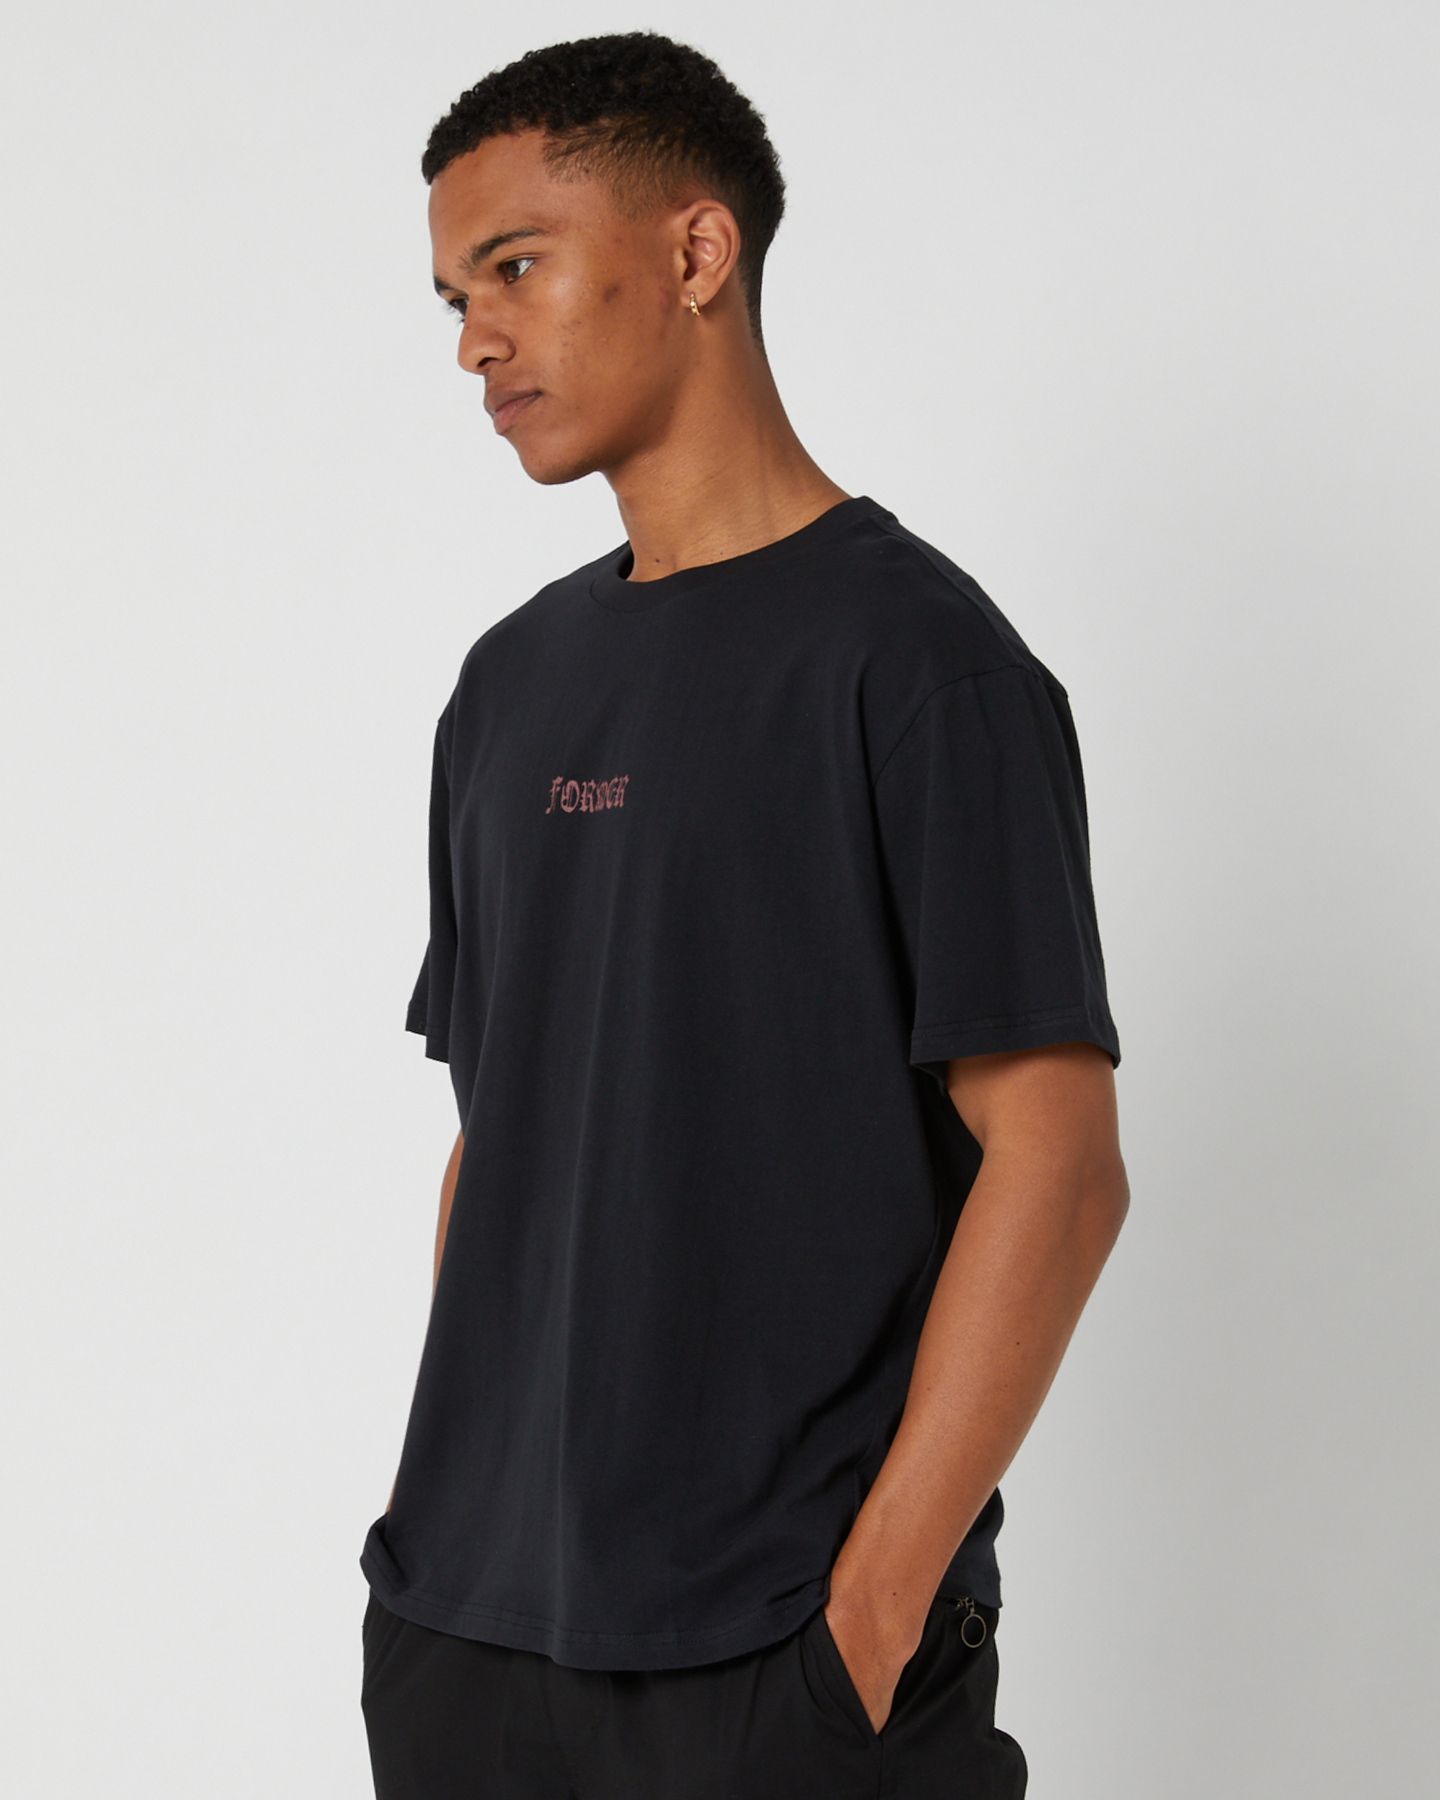 Former Shatter T-Shirt - Black | SurfStitch